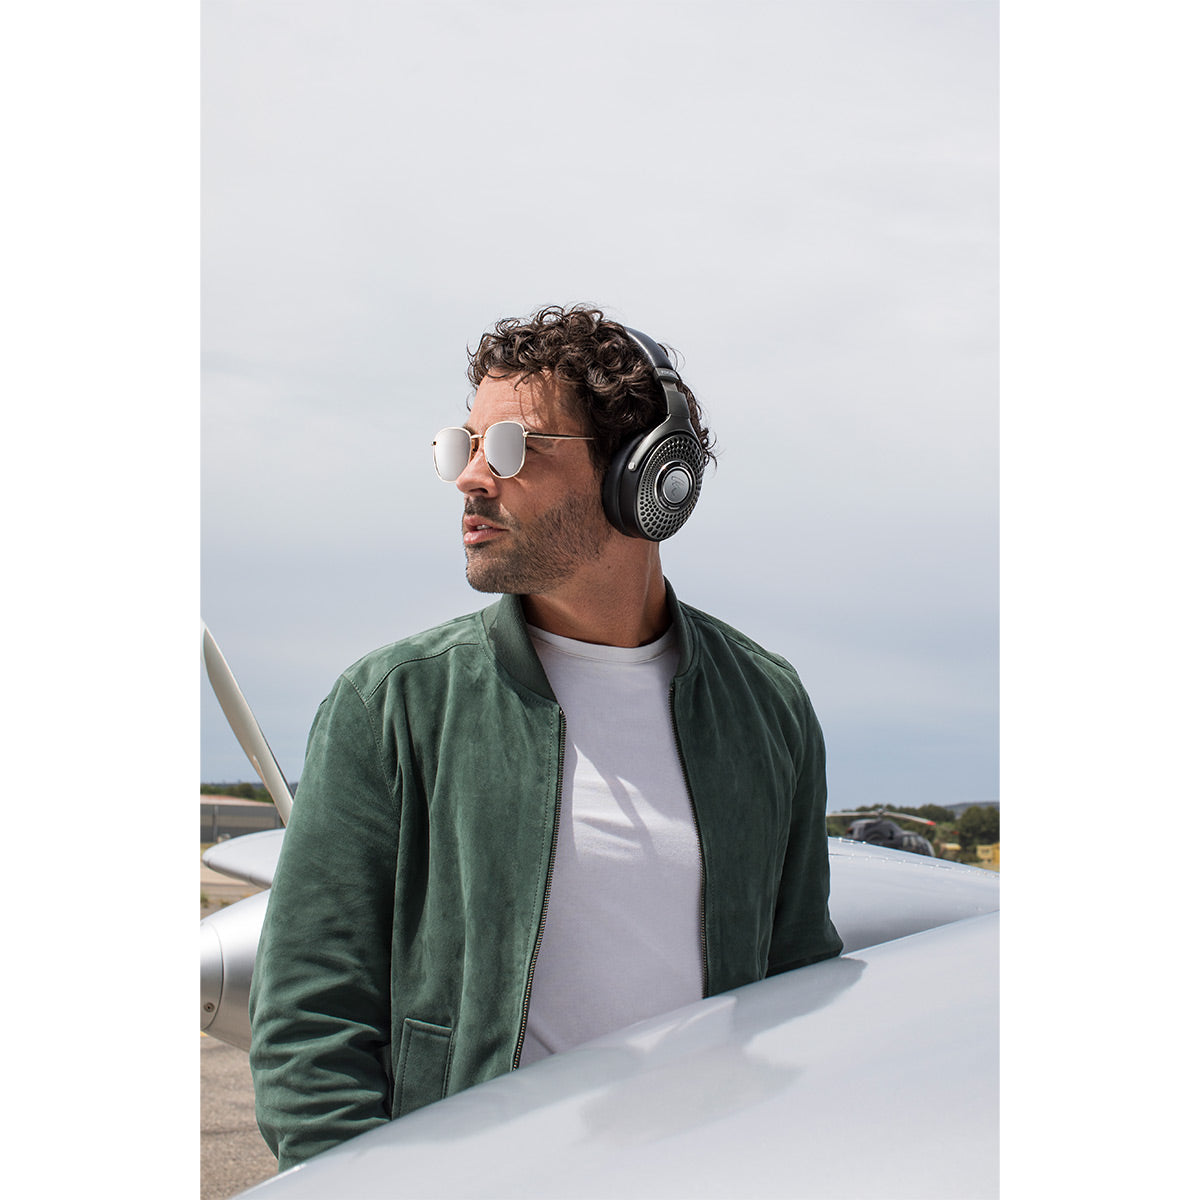 Focal Bathys Hi-Fi Bluetooth Active Noise Cancelling Headphones —  Audiophilia